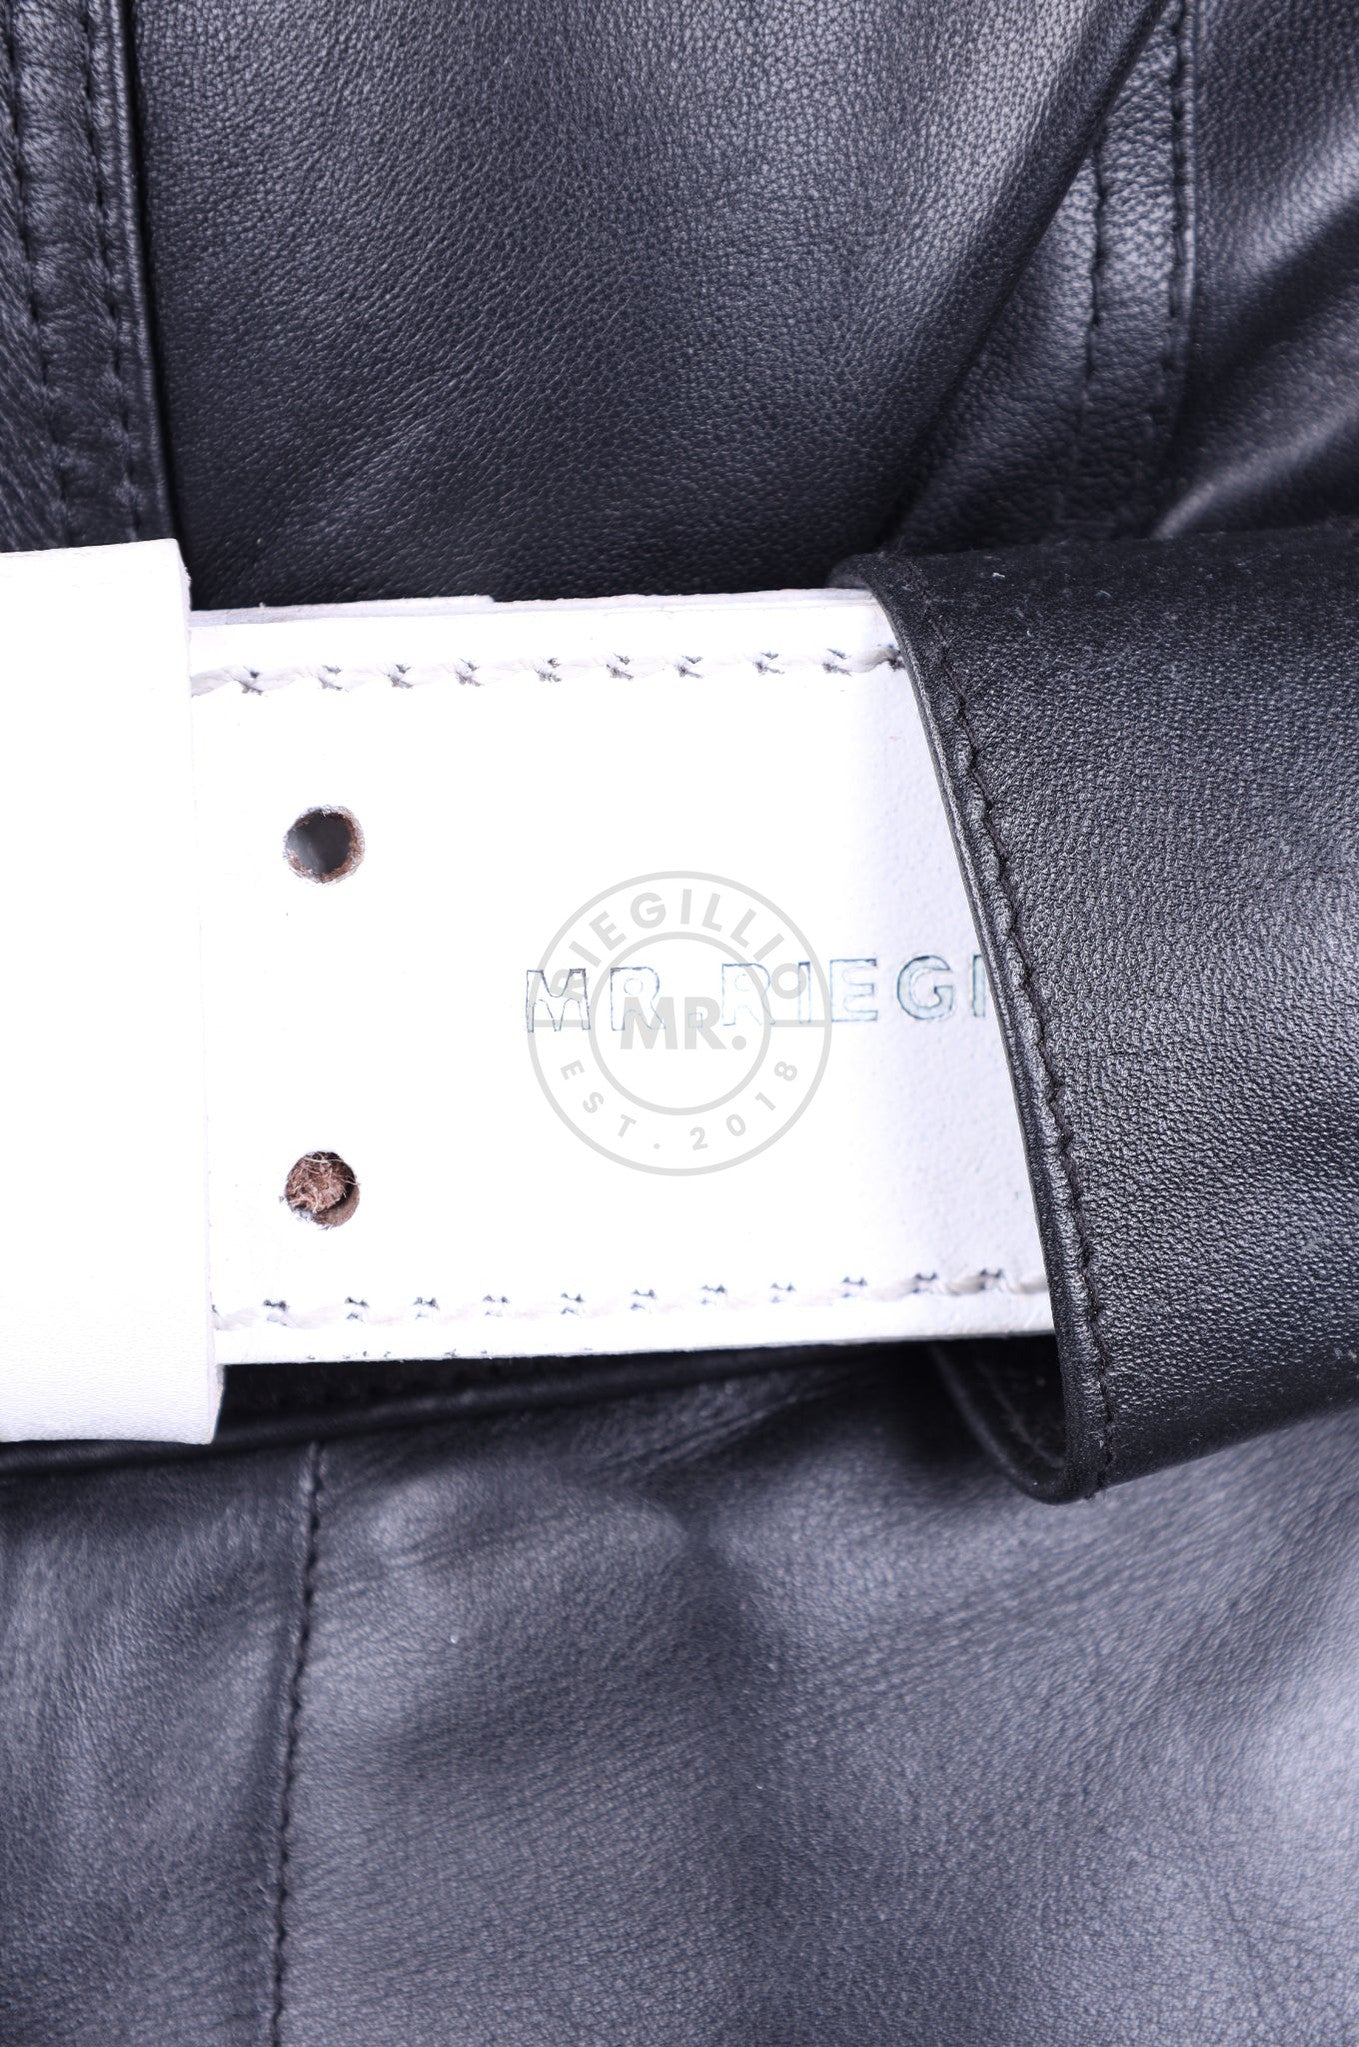 White Leather Belt at MR. Riegillio